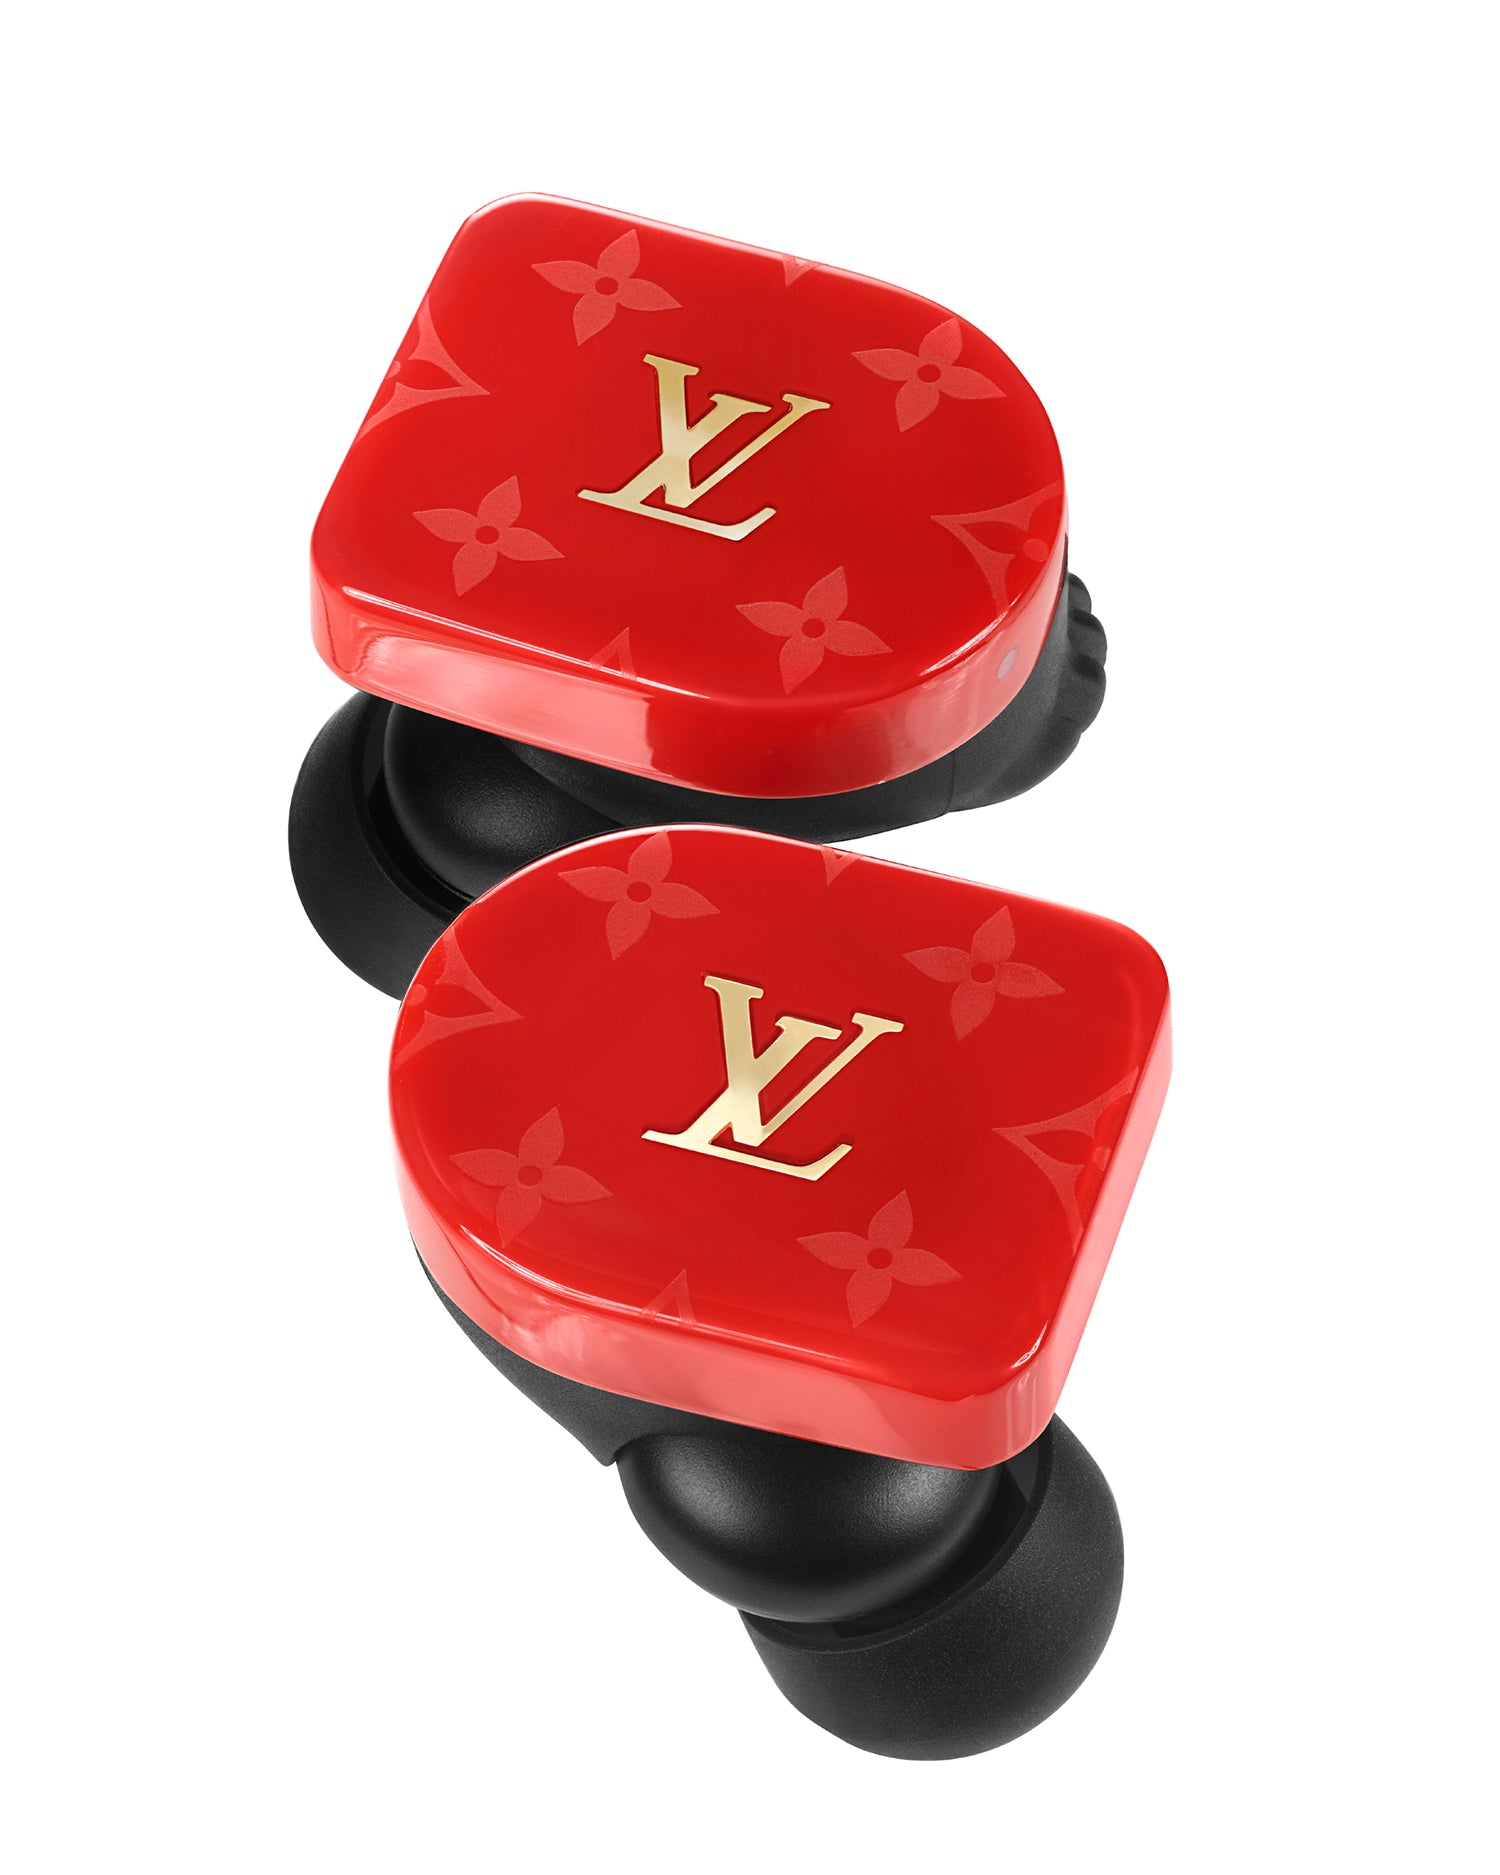 The New Louis Vuitton Horizon Wireless Earphones Are Here